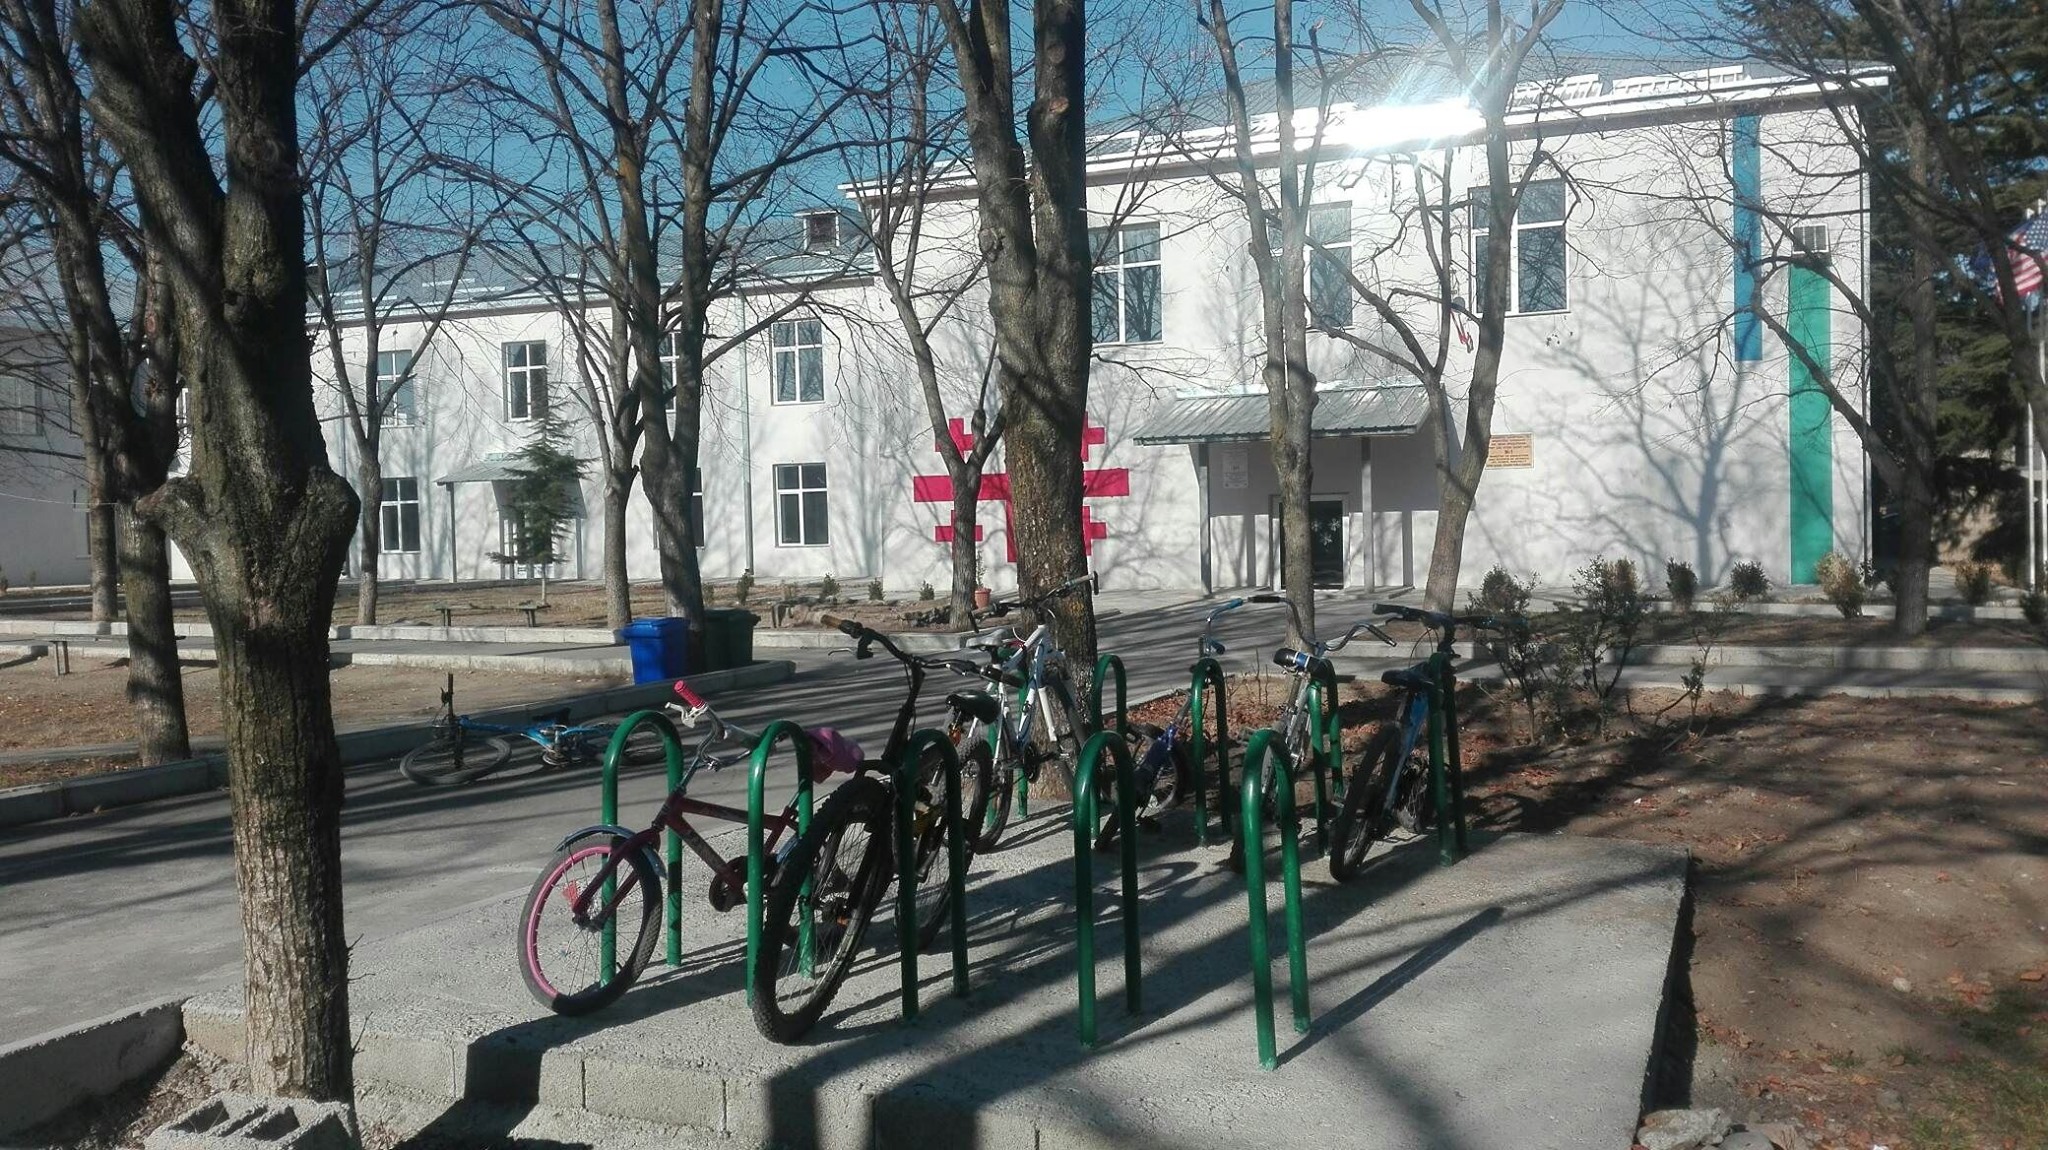 Bike parking racks at schools and sports fields 